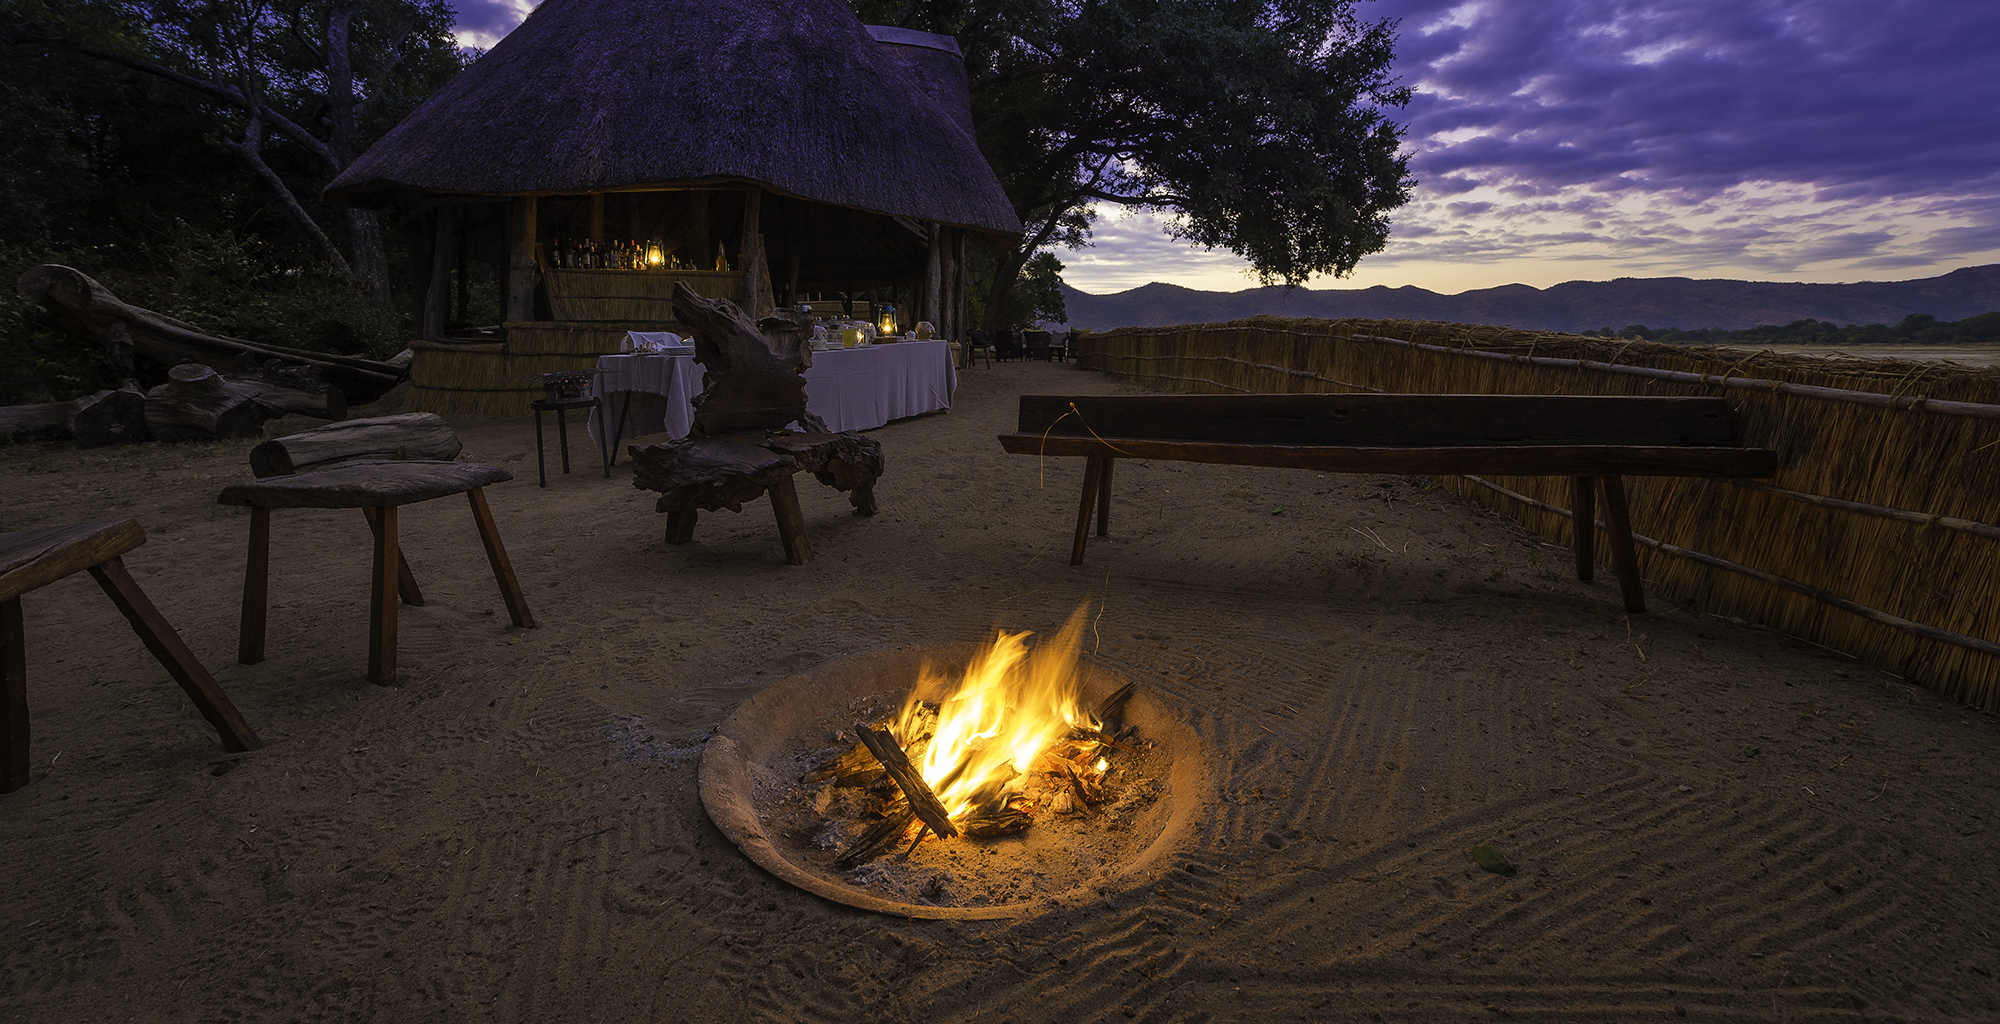 Zambia-Chamilandu-Bushcamp-Campfire